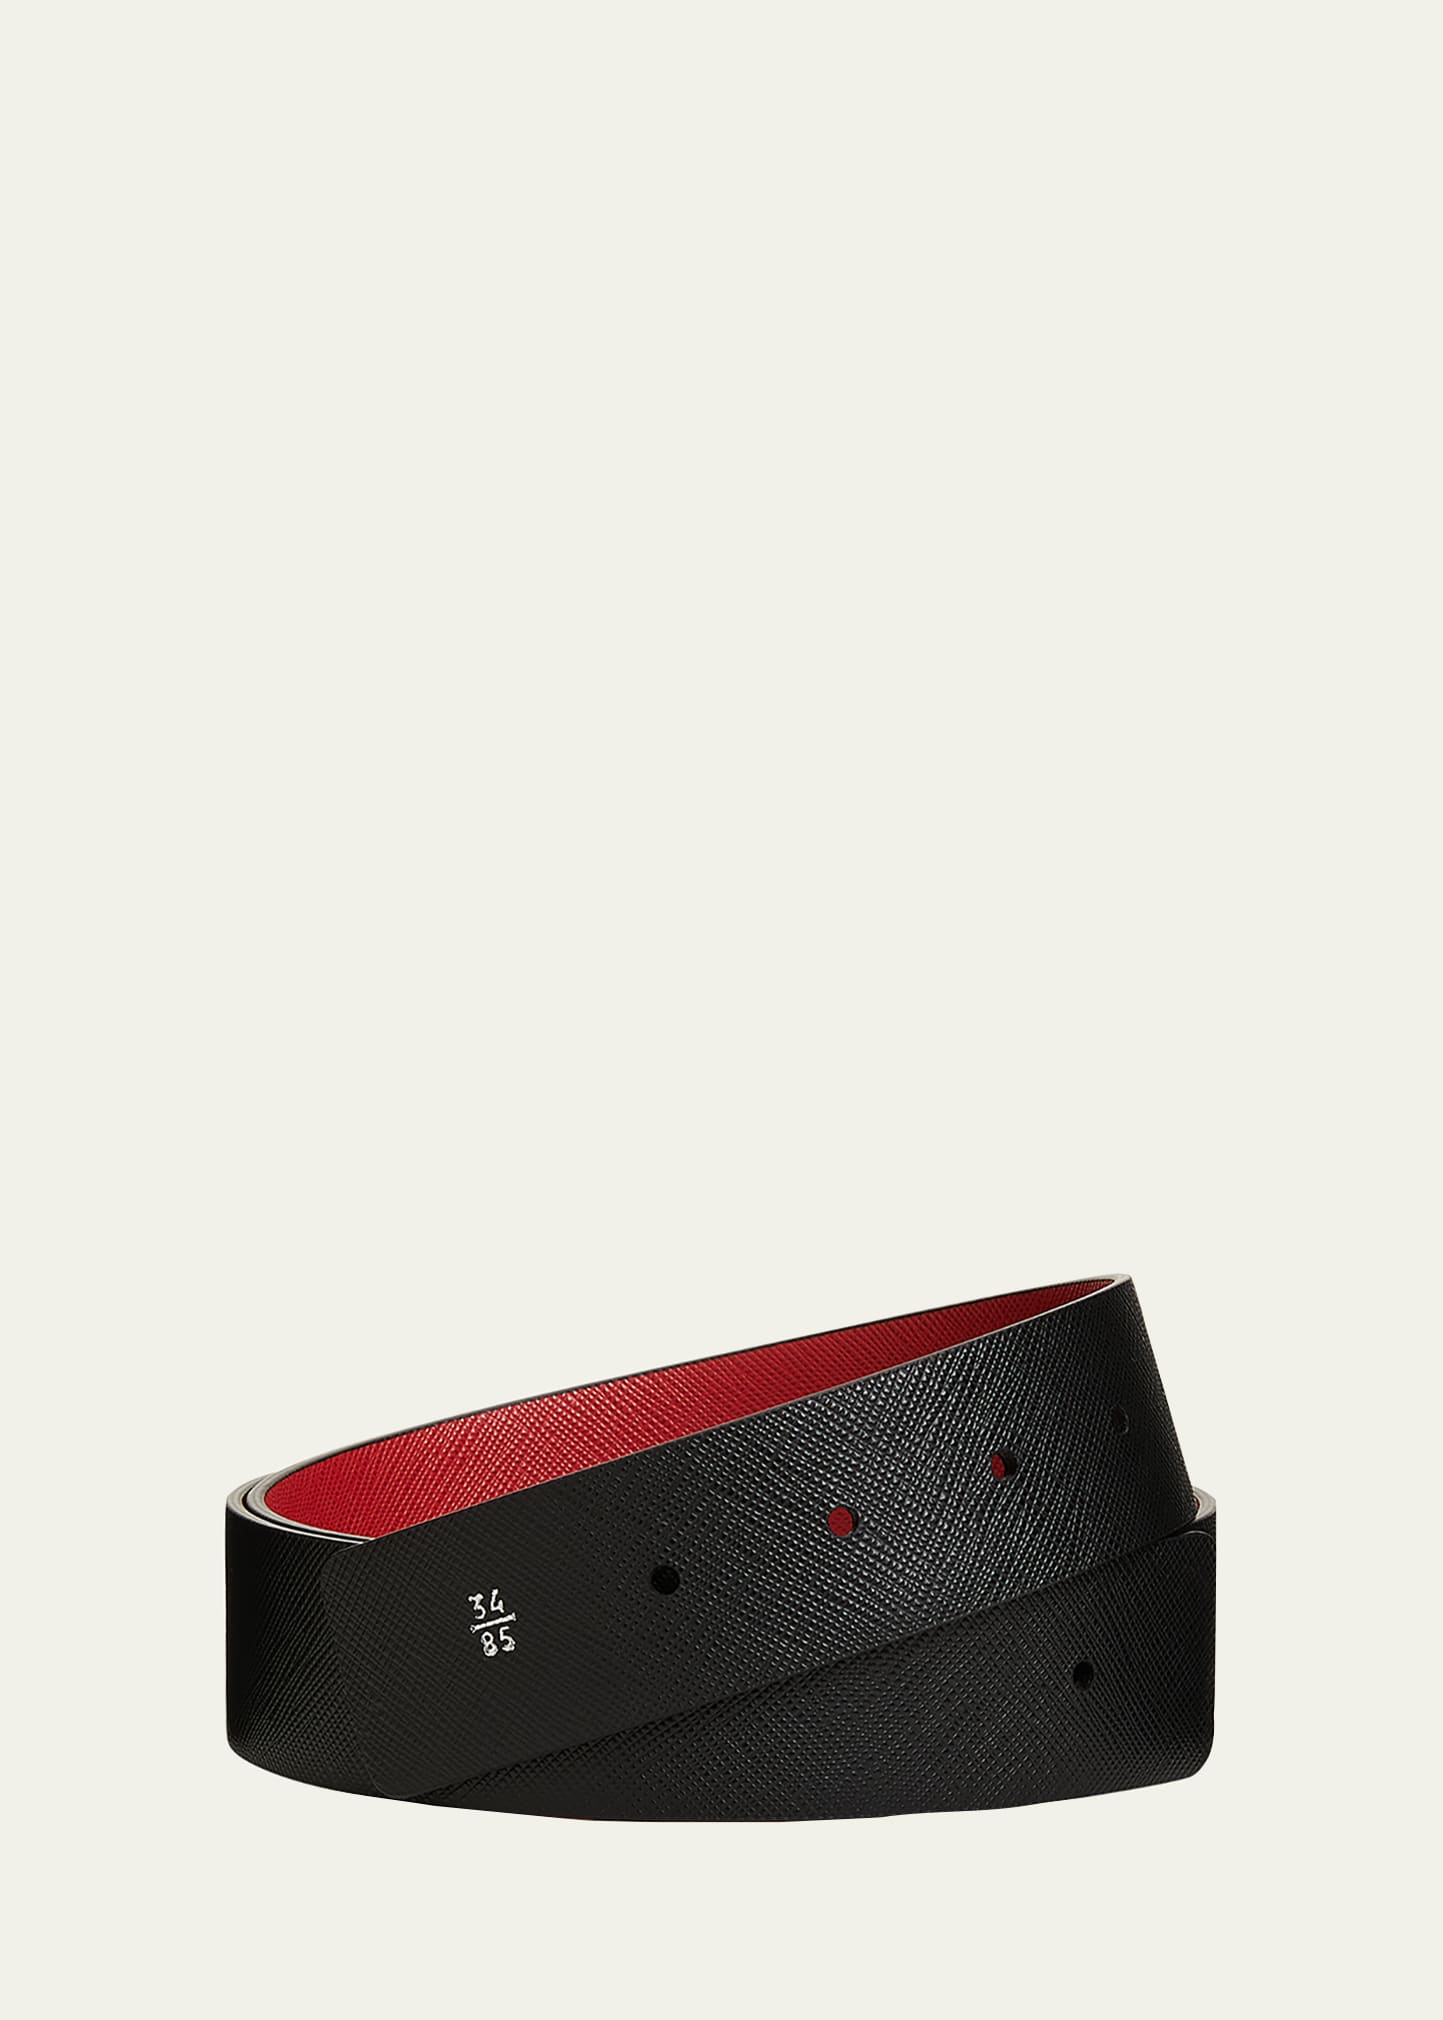 Prada Men's Saffiano Leather Belt Strap In Red